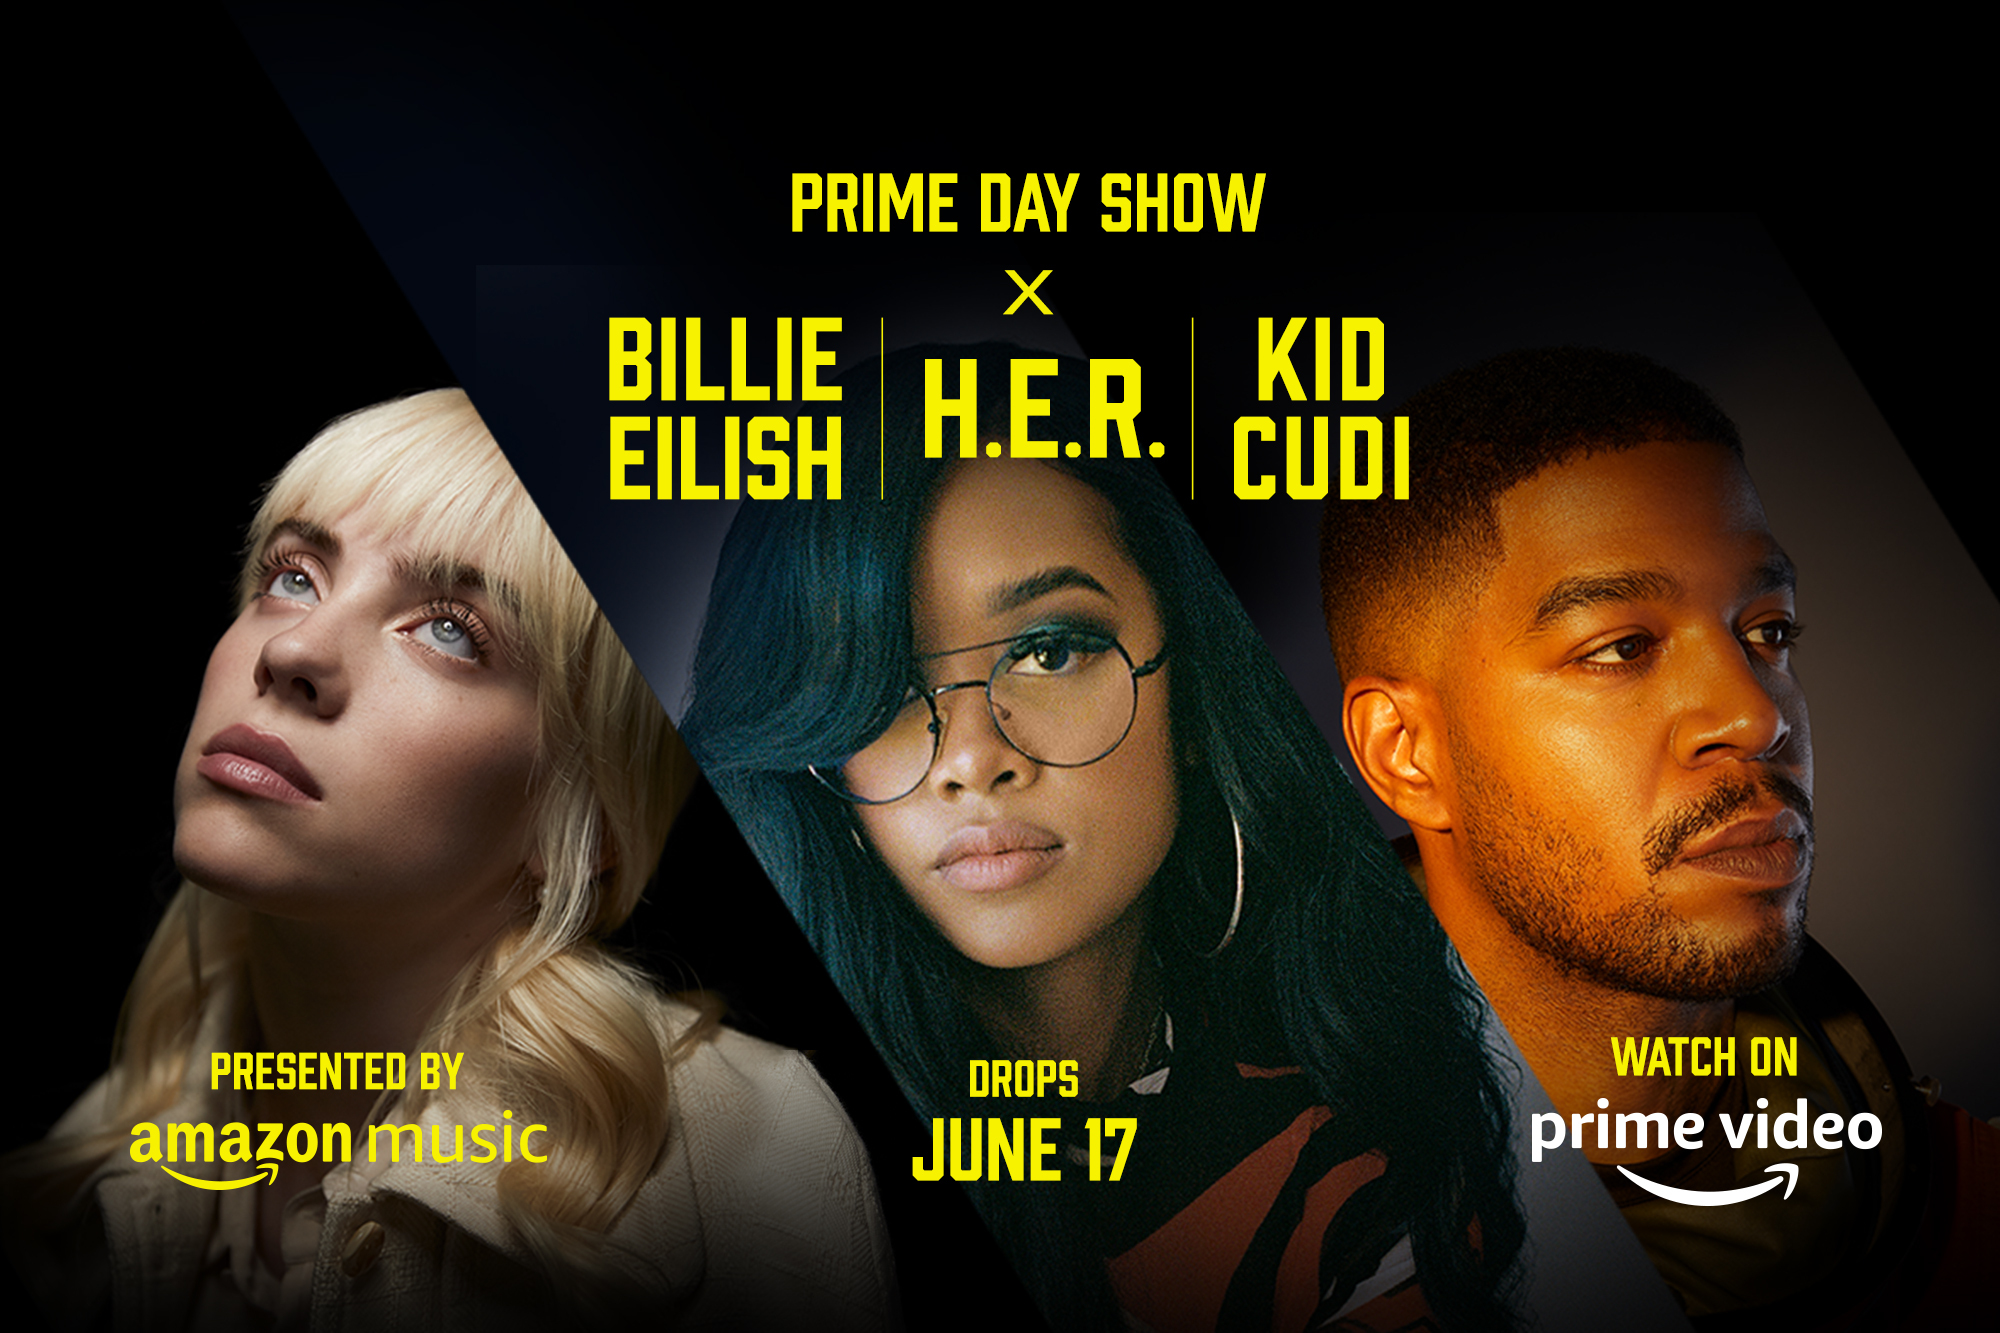 Amazon Announces Prime Day Show Featuring H.E.R, Billie Eilish and Kid Cudi